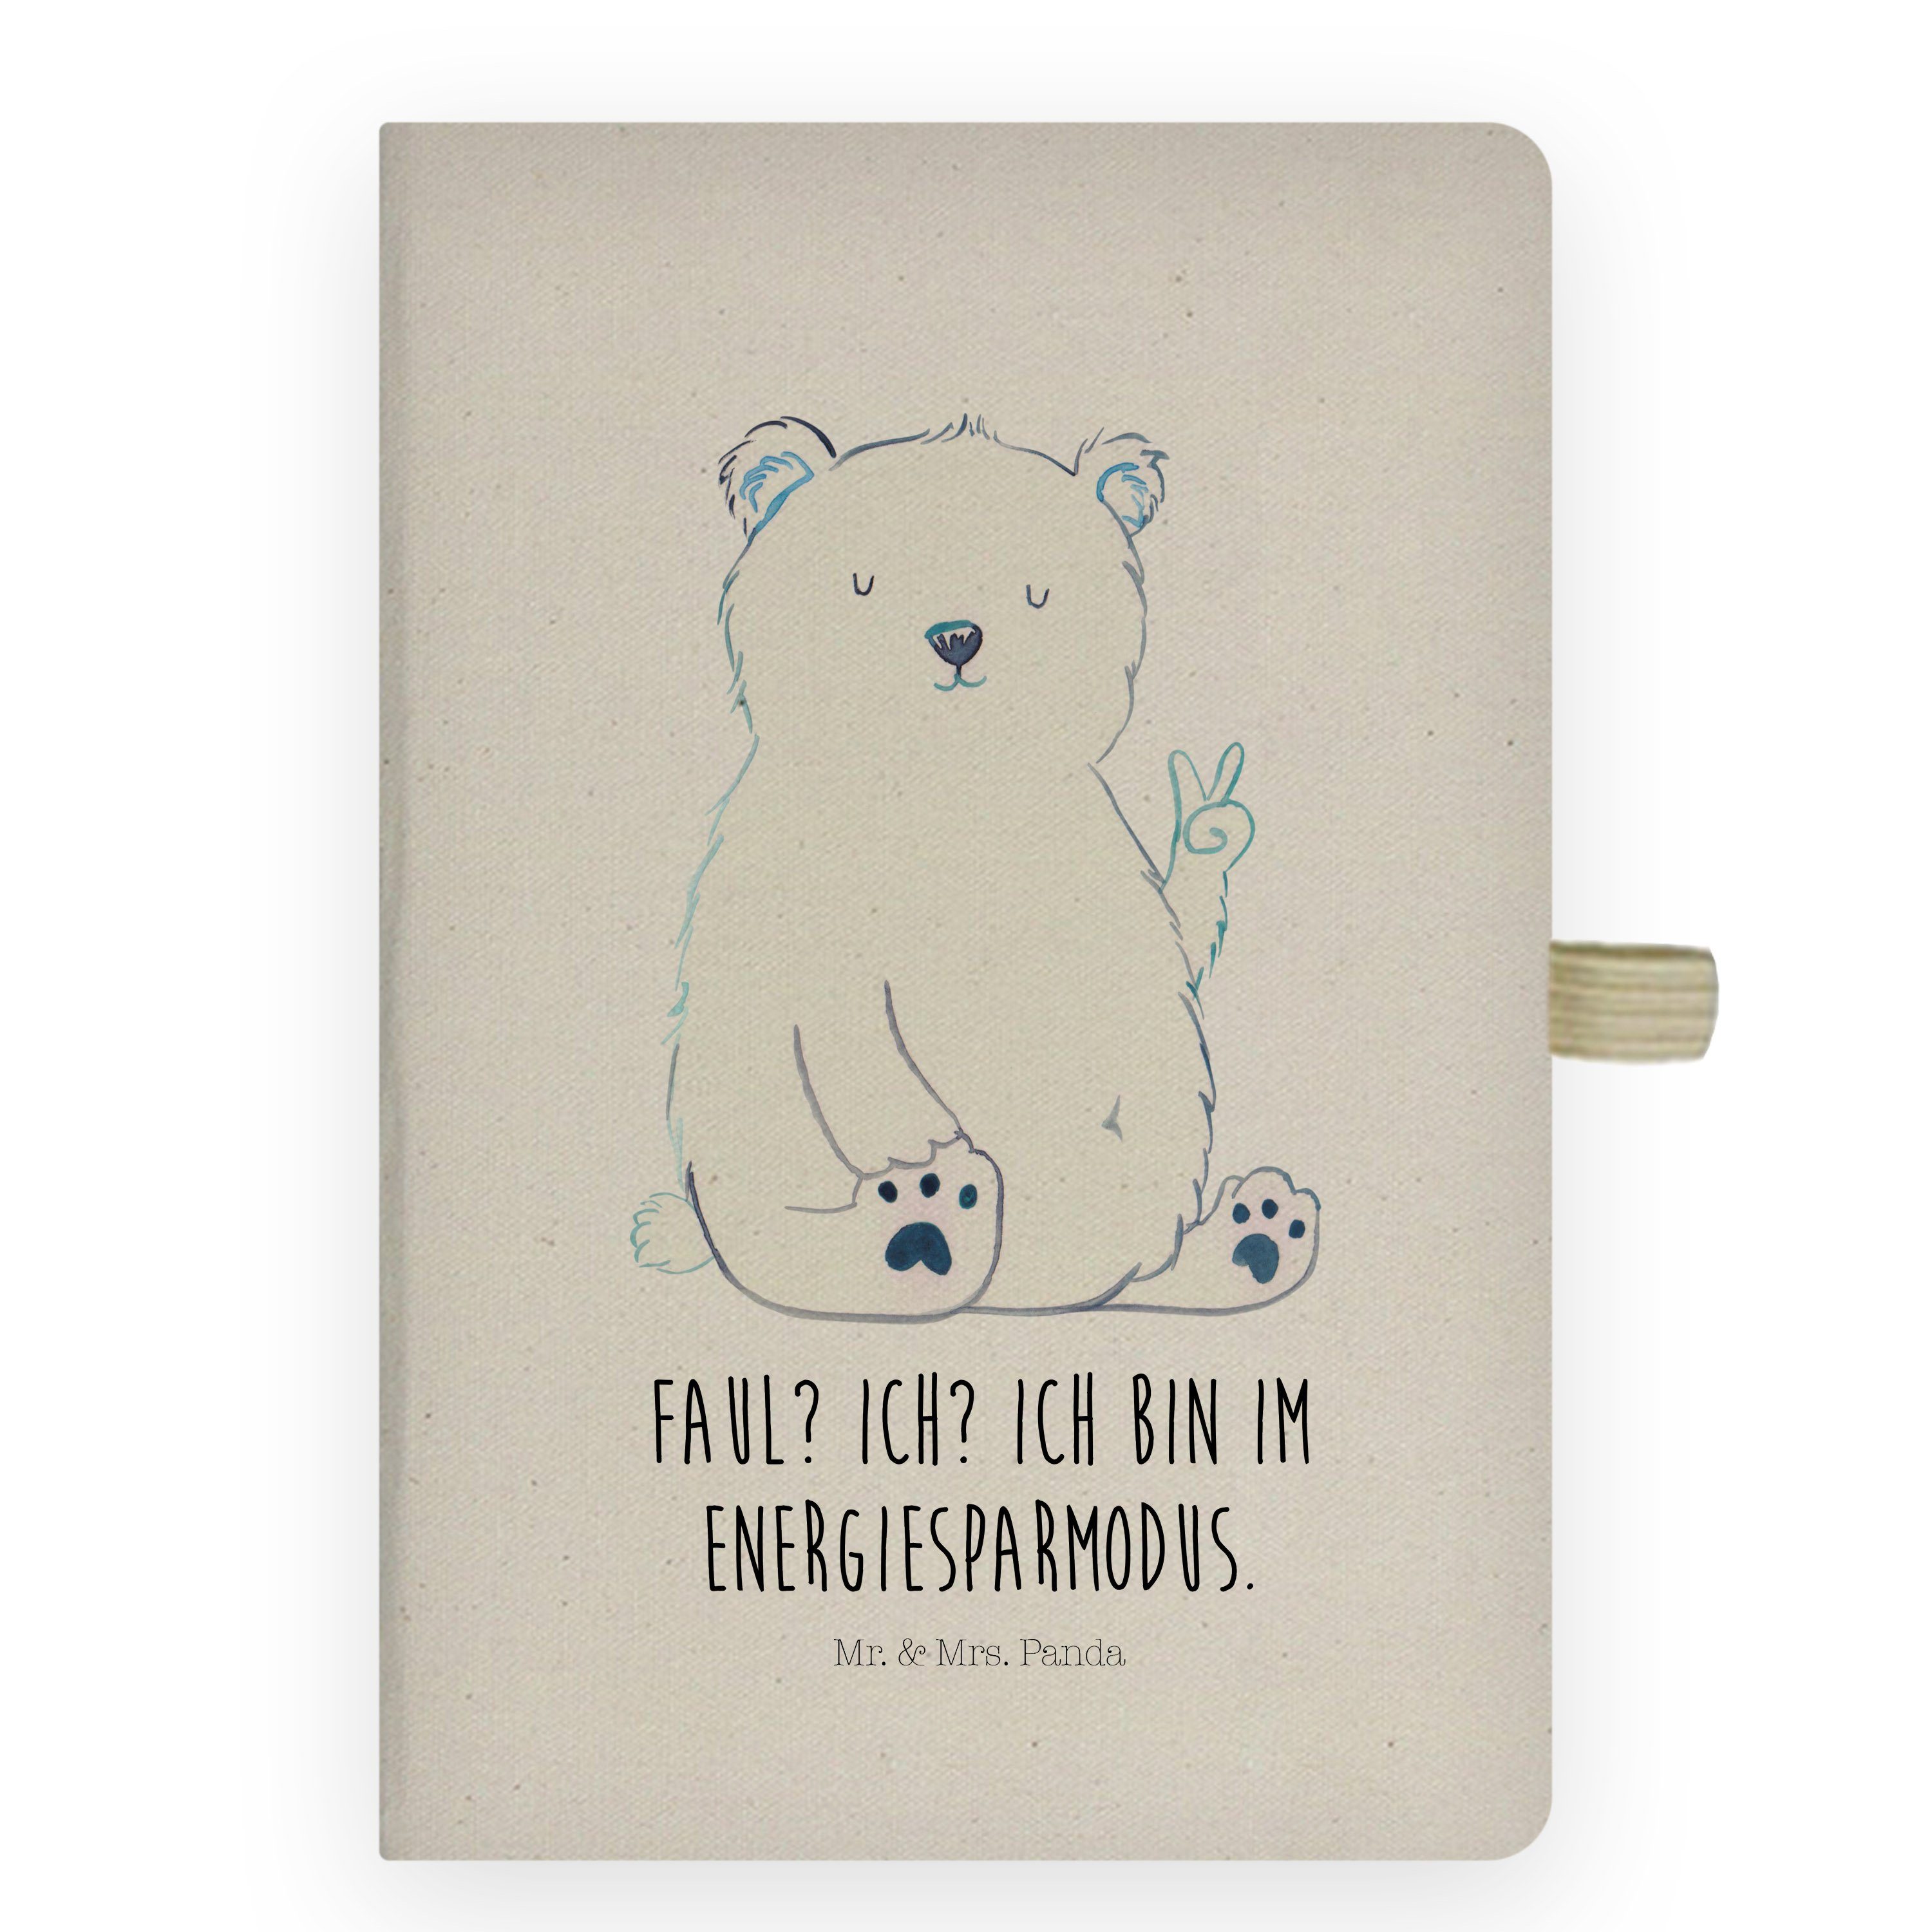 Mr. & Mrs. Panda Notizbuch Eisbär Faul - Transparent - Geschenk, Teddybär, Eintragebuch, Arbeit, Mr. & Mrs. Panda